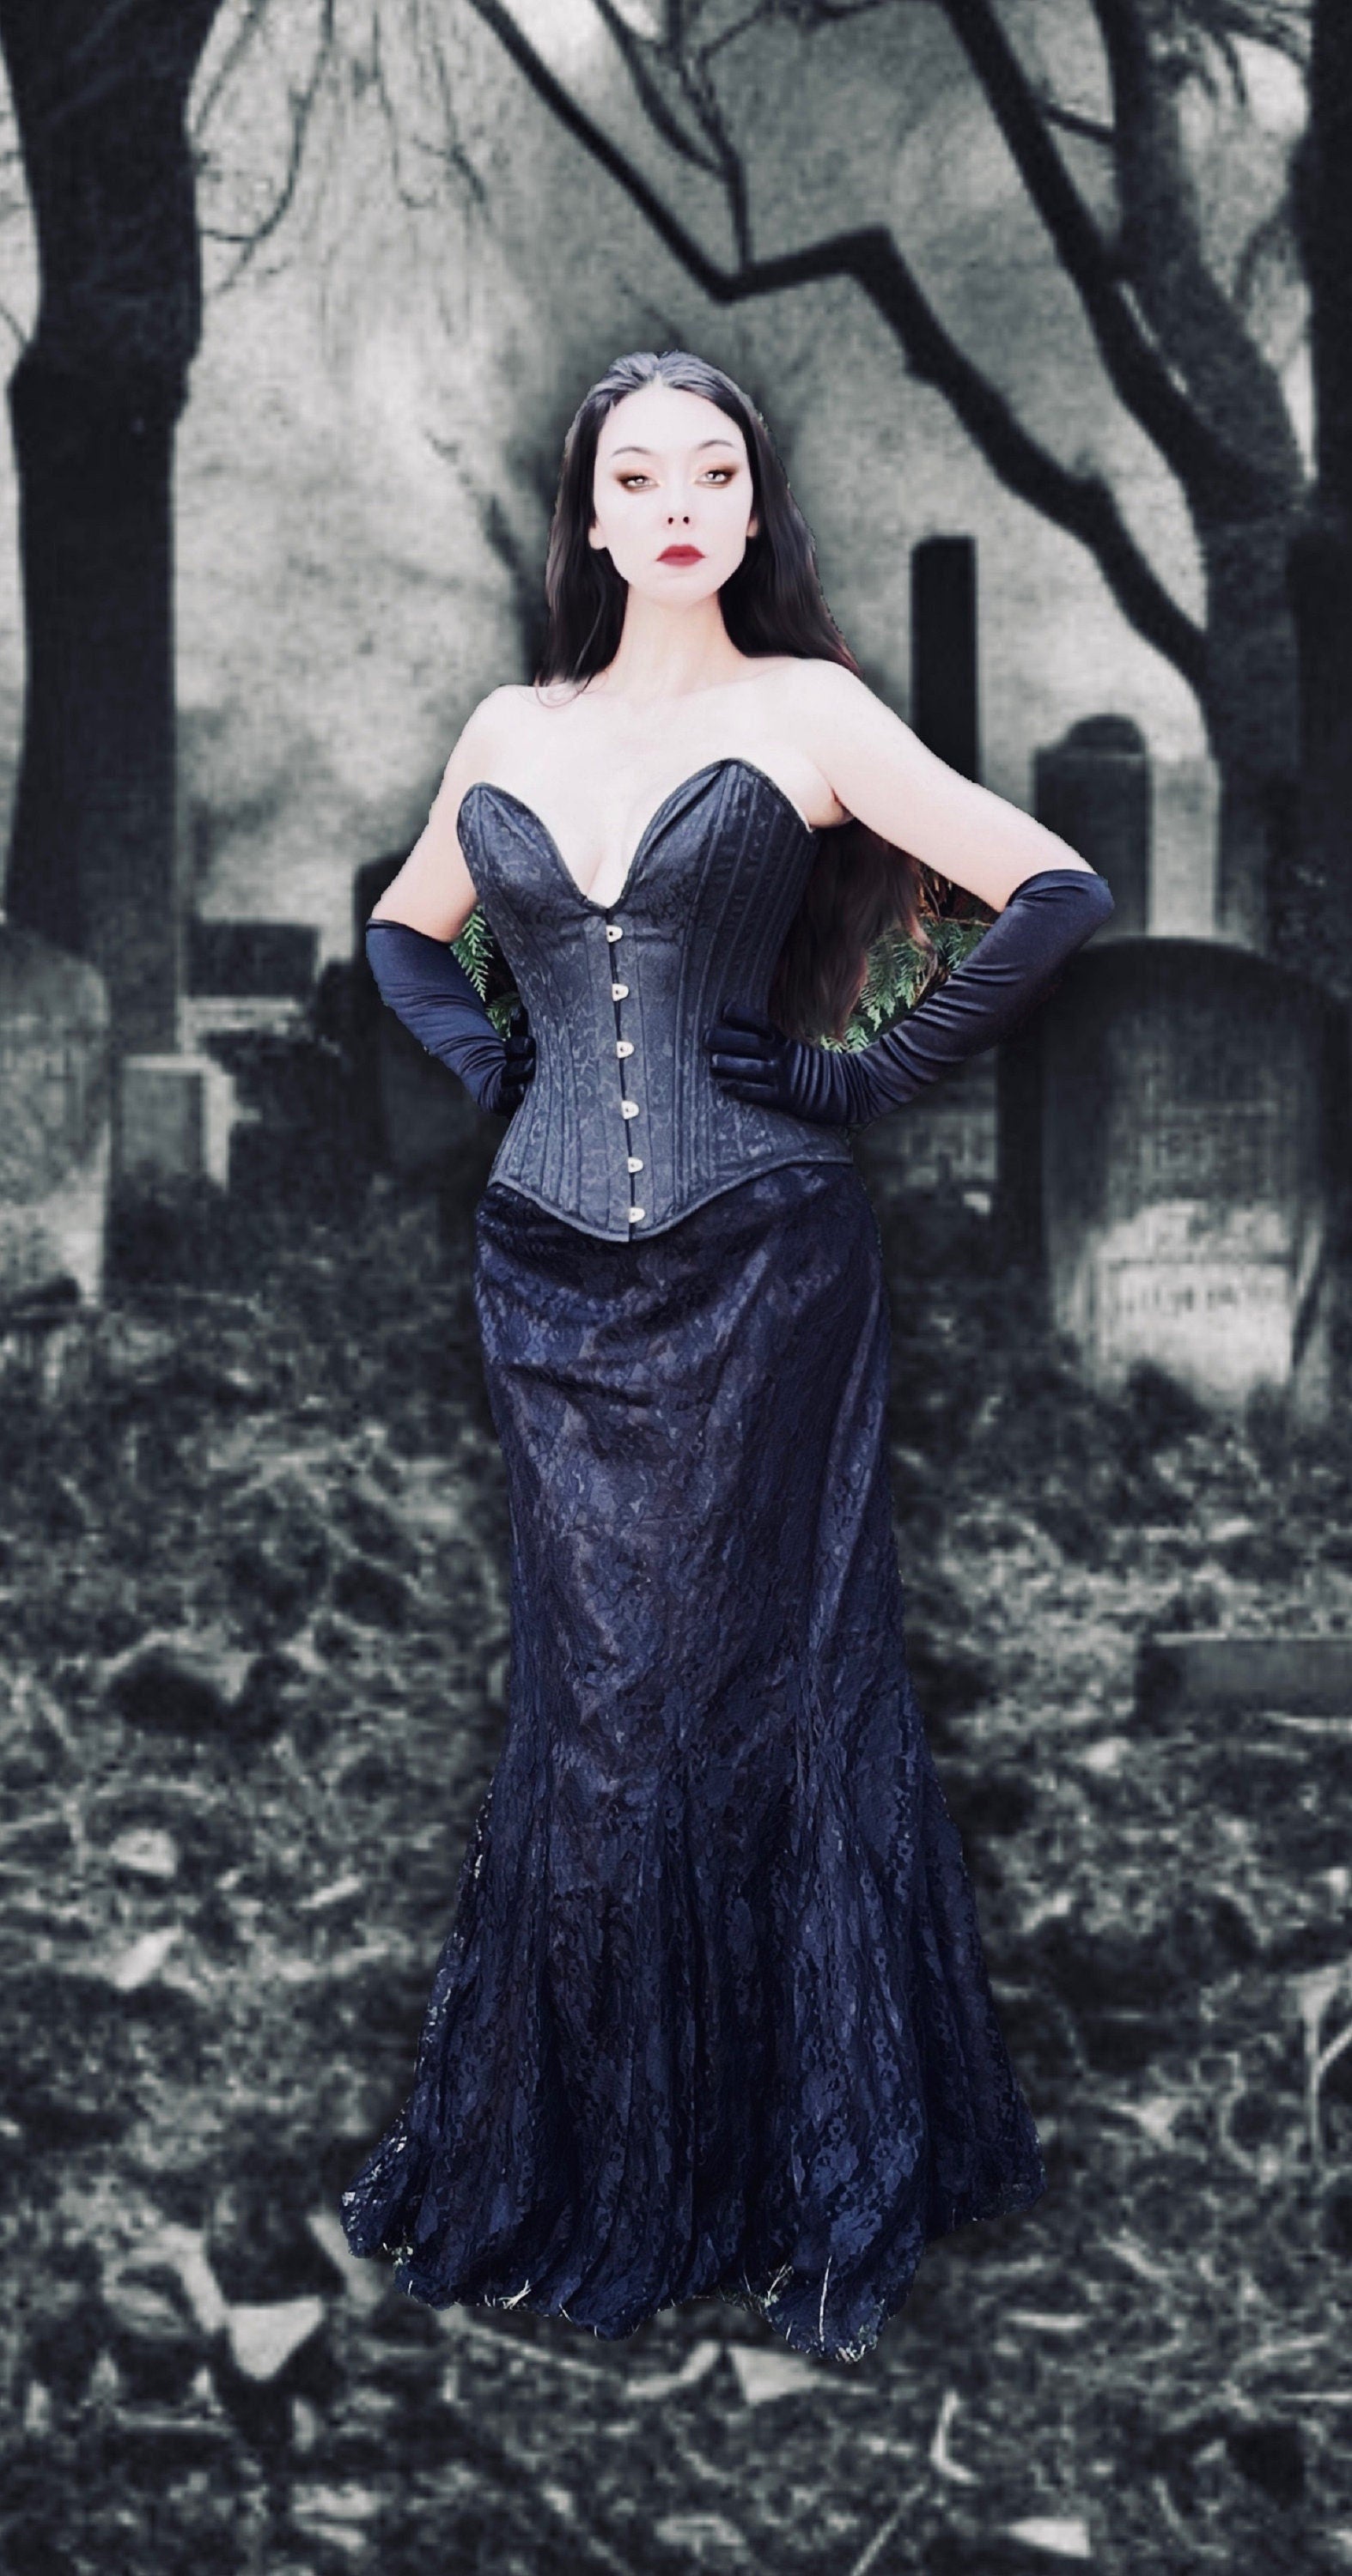 Dark Angel Victorian Gothic Dark Elegance Skirt and Stays Corset 2 Piece Costume. Morticia Fantasy Cosplay Dress. Reminisce Brand.